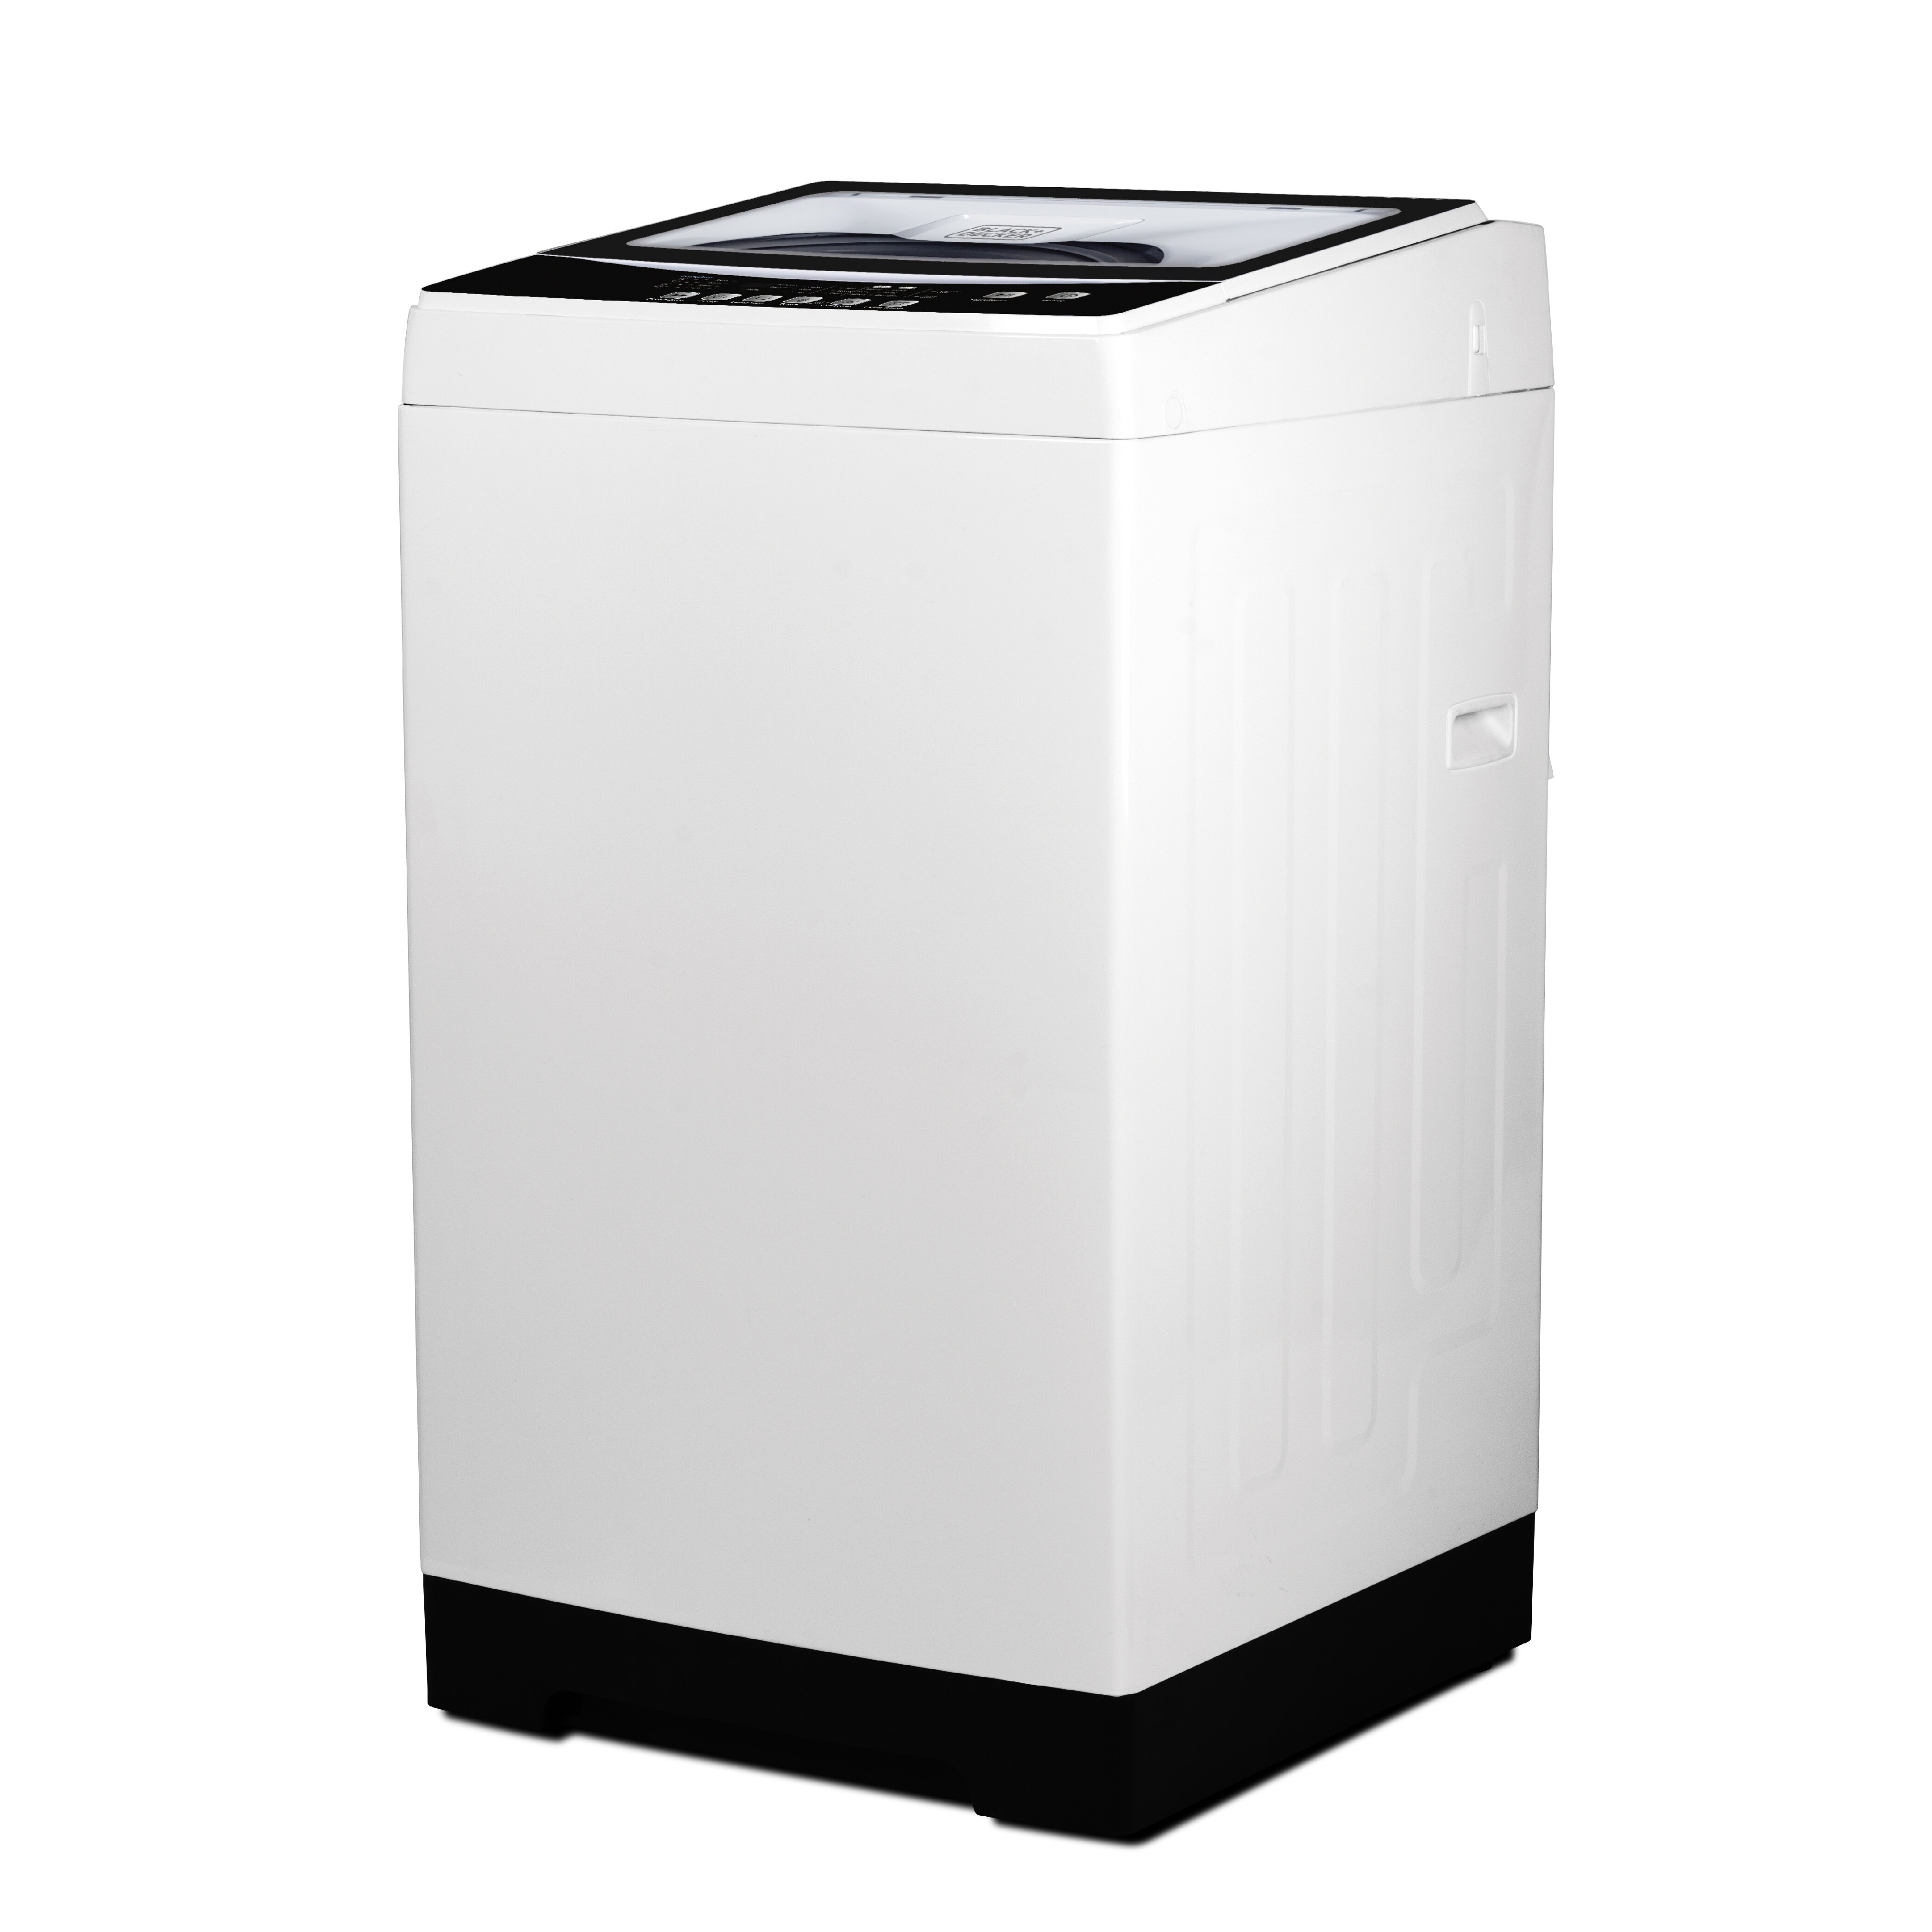 BLACK+DECKER 2.65-cu ft Portable Electric Dryer (White)